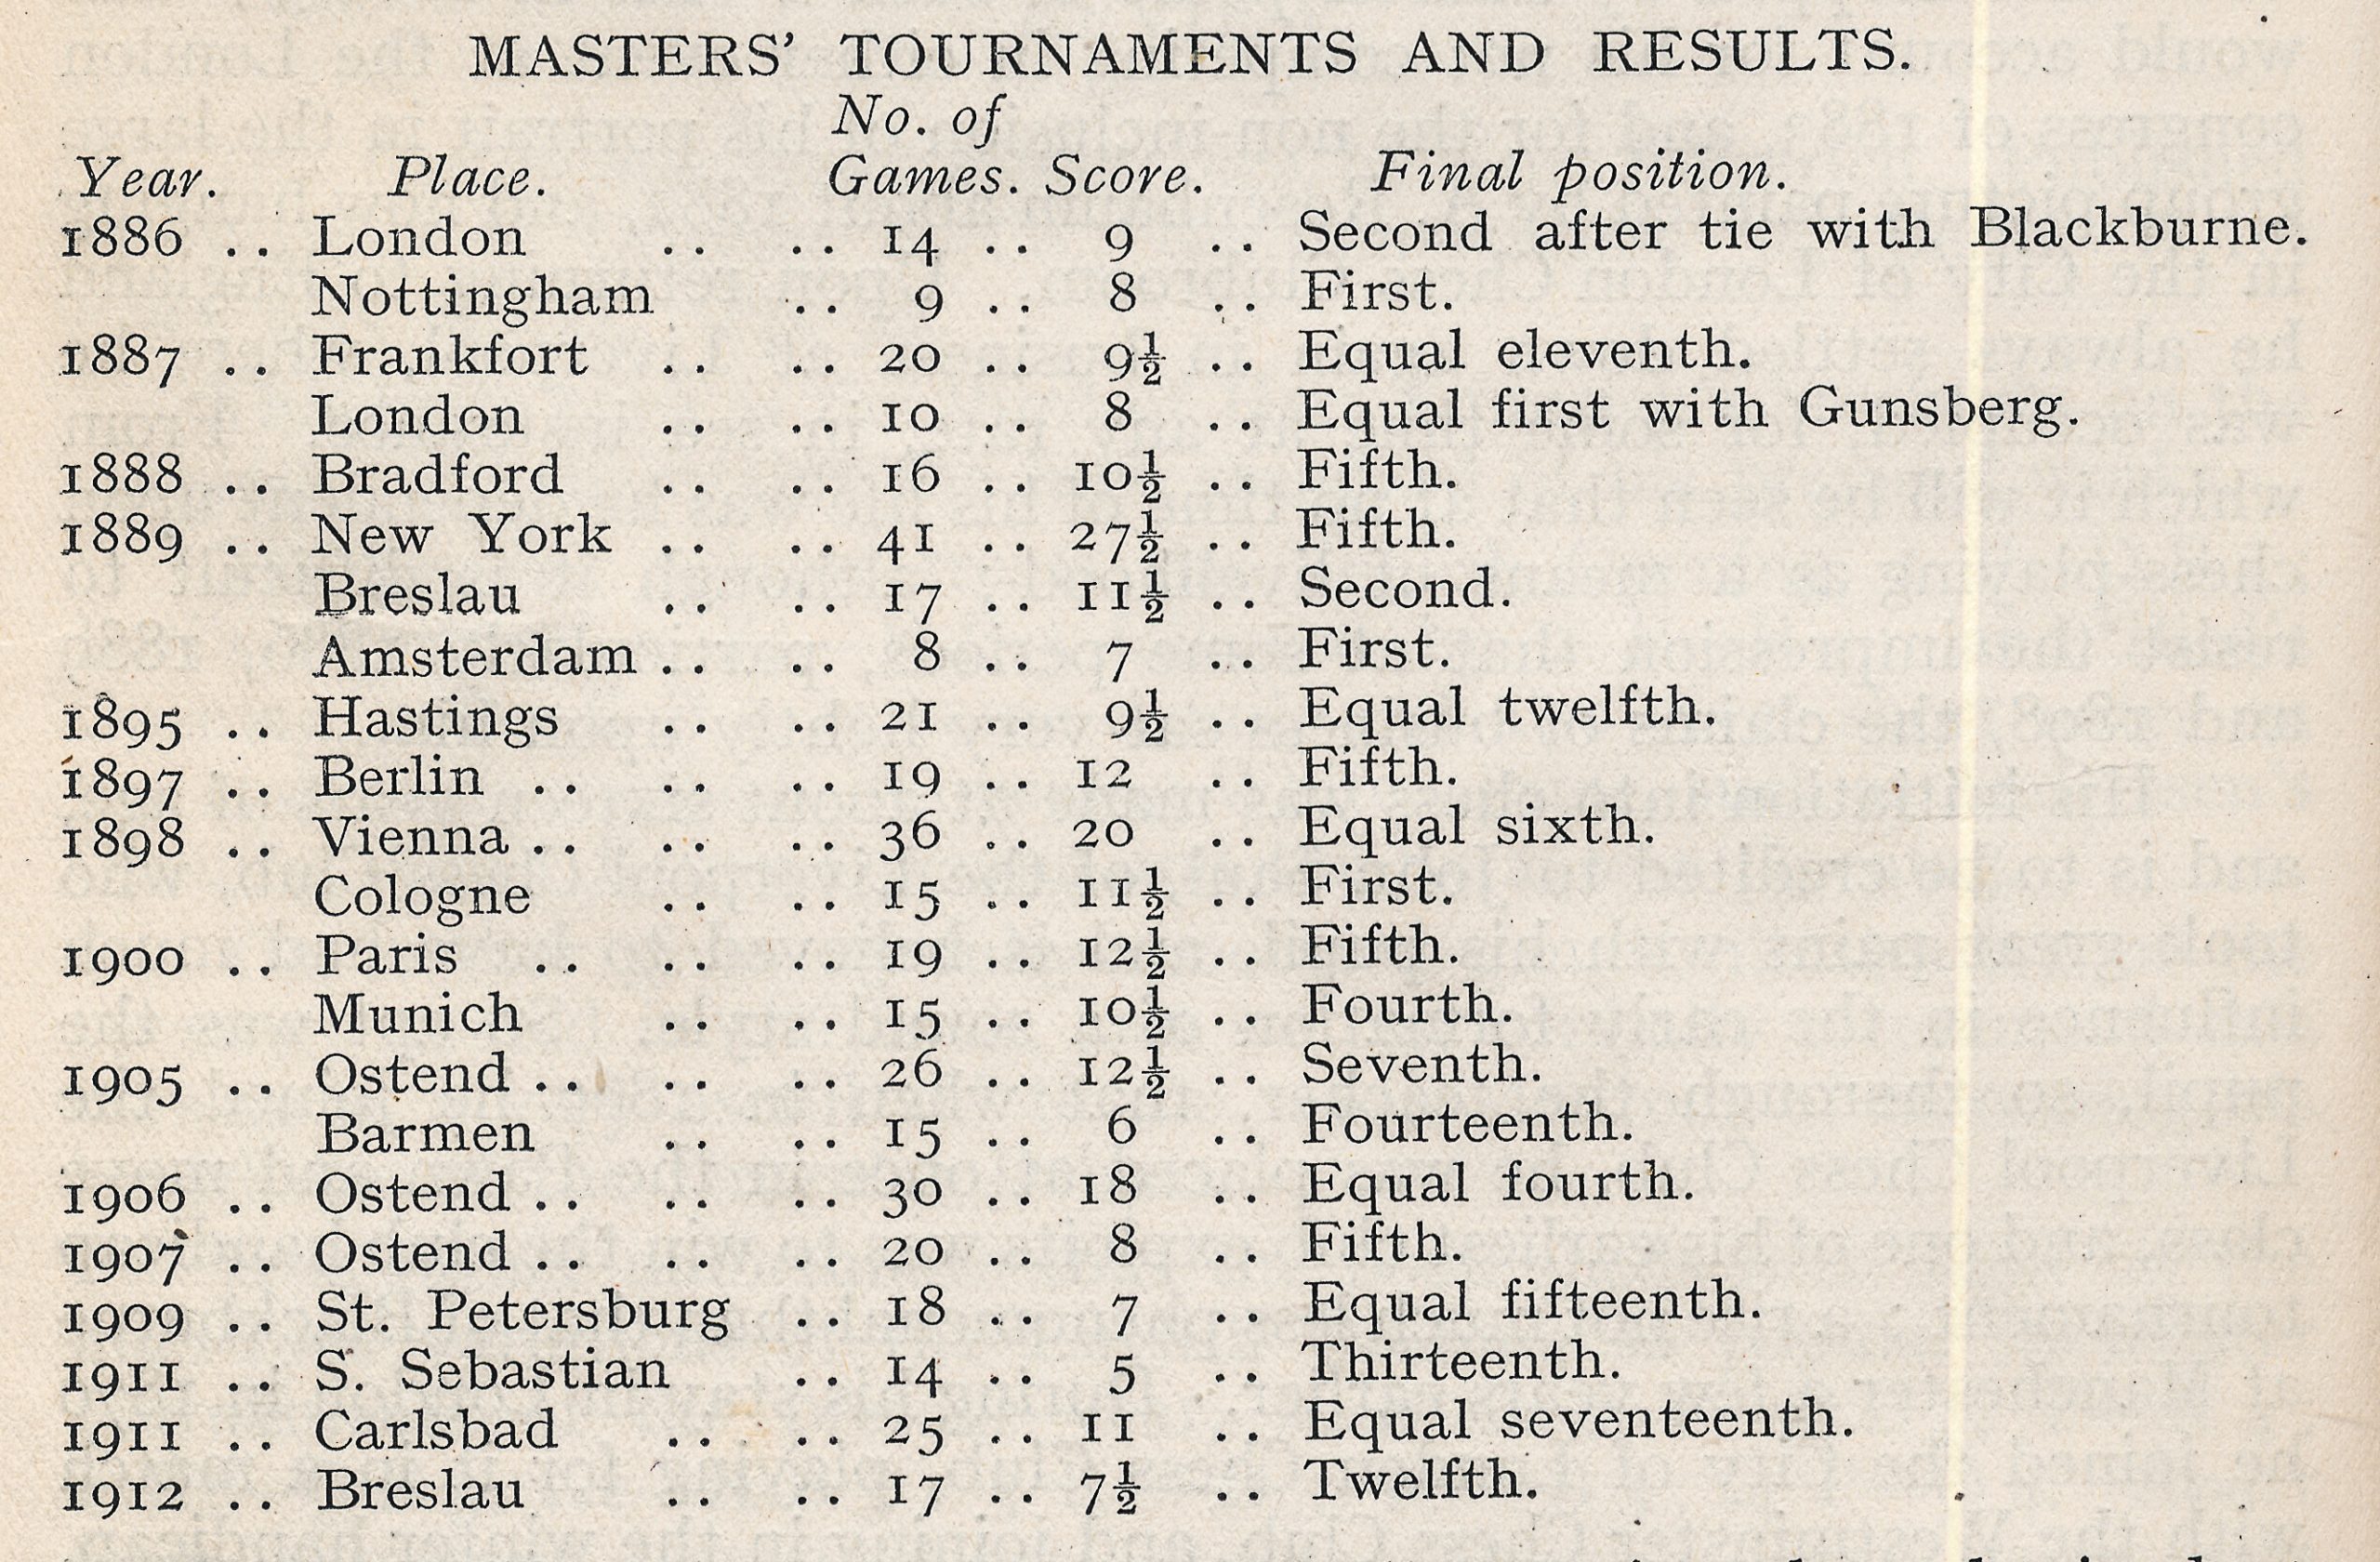 The tournament record of Amos Burn according to British Chess Magazine, Volume XLVI (46, 1926)